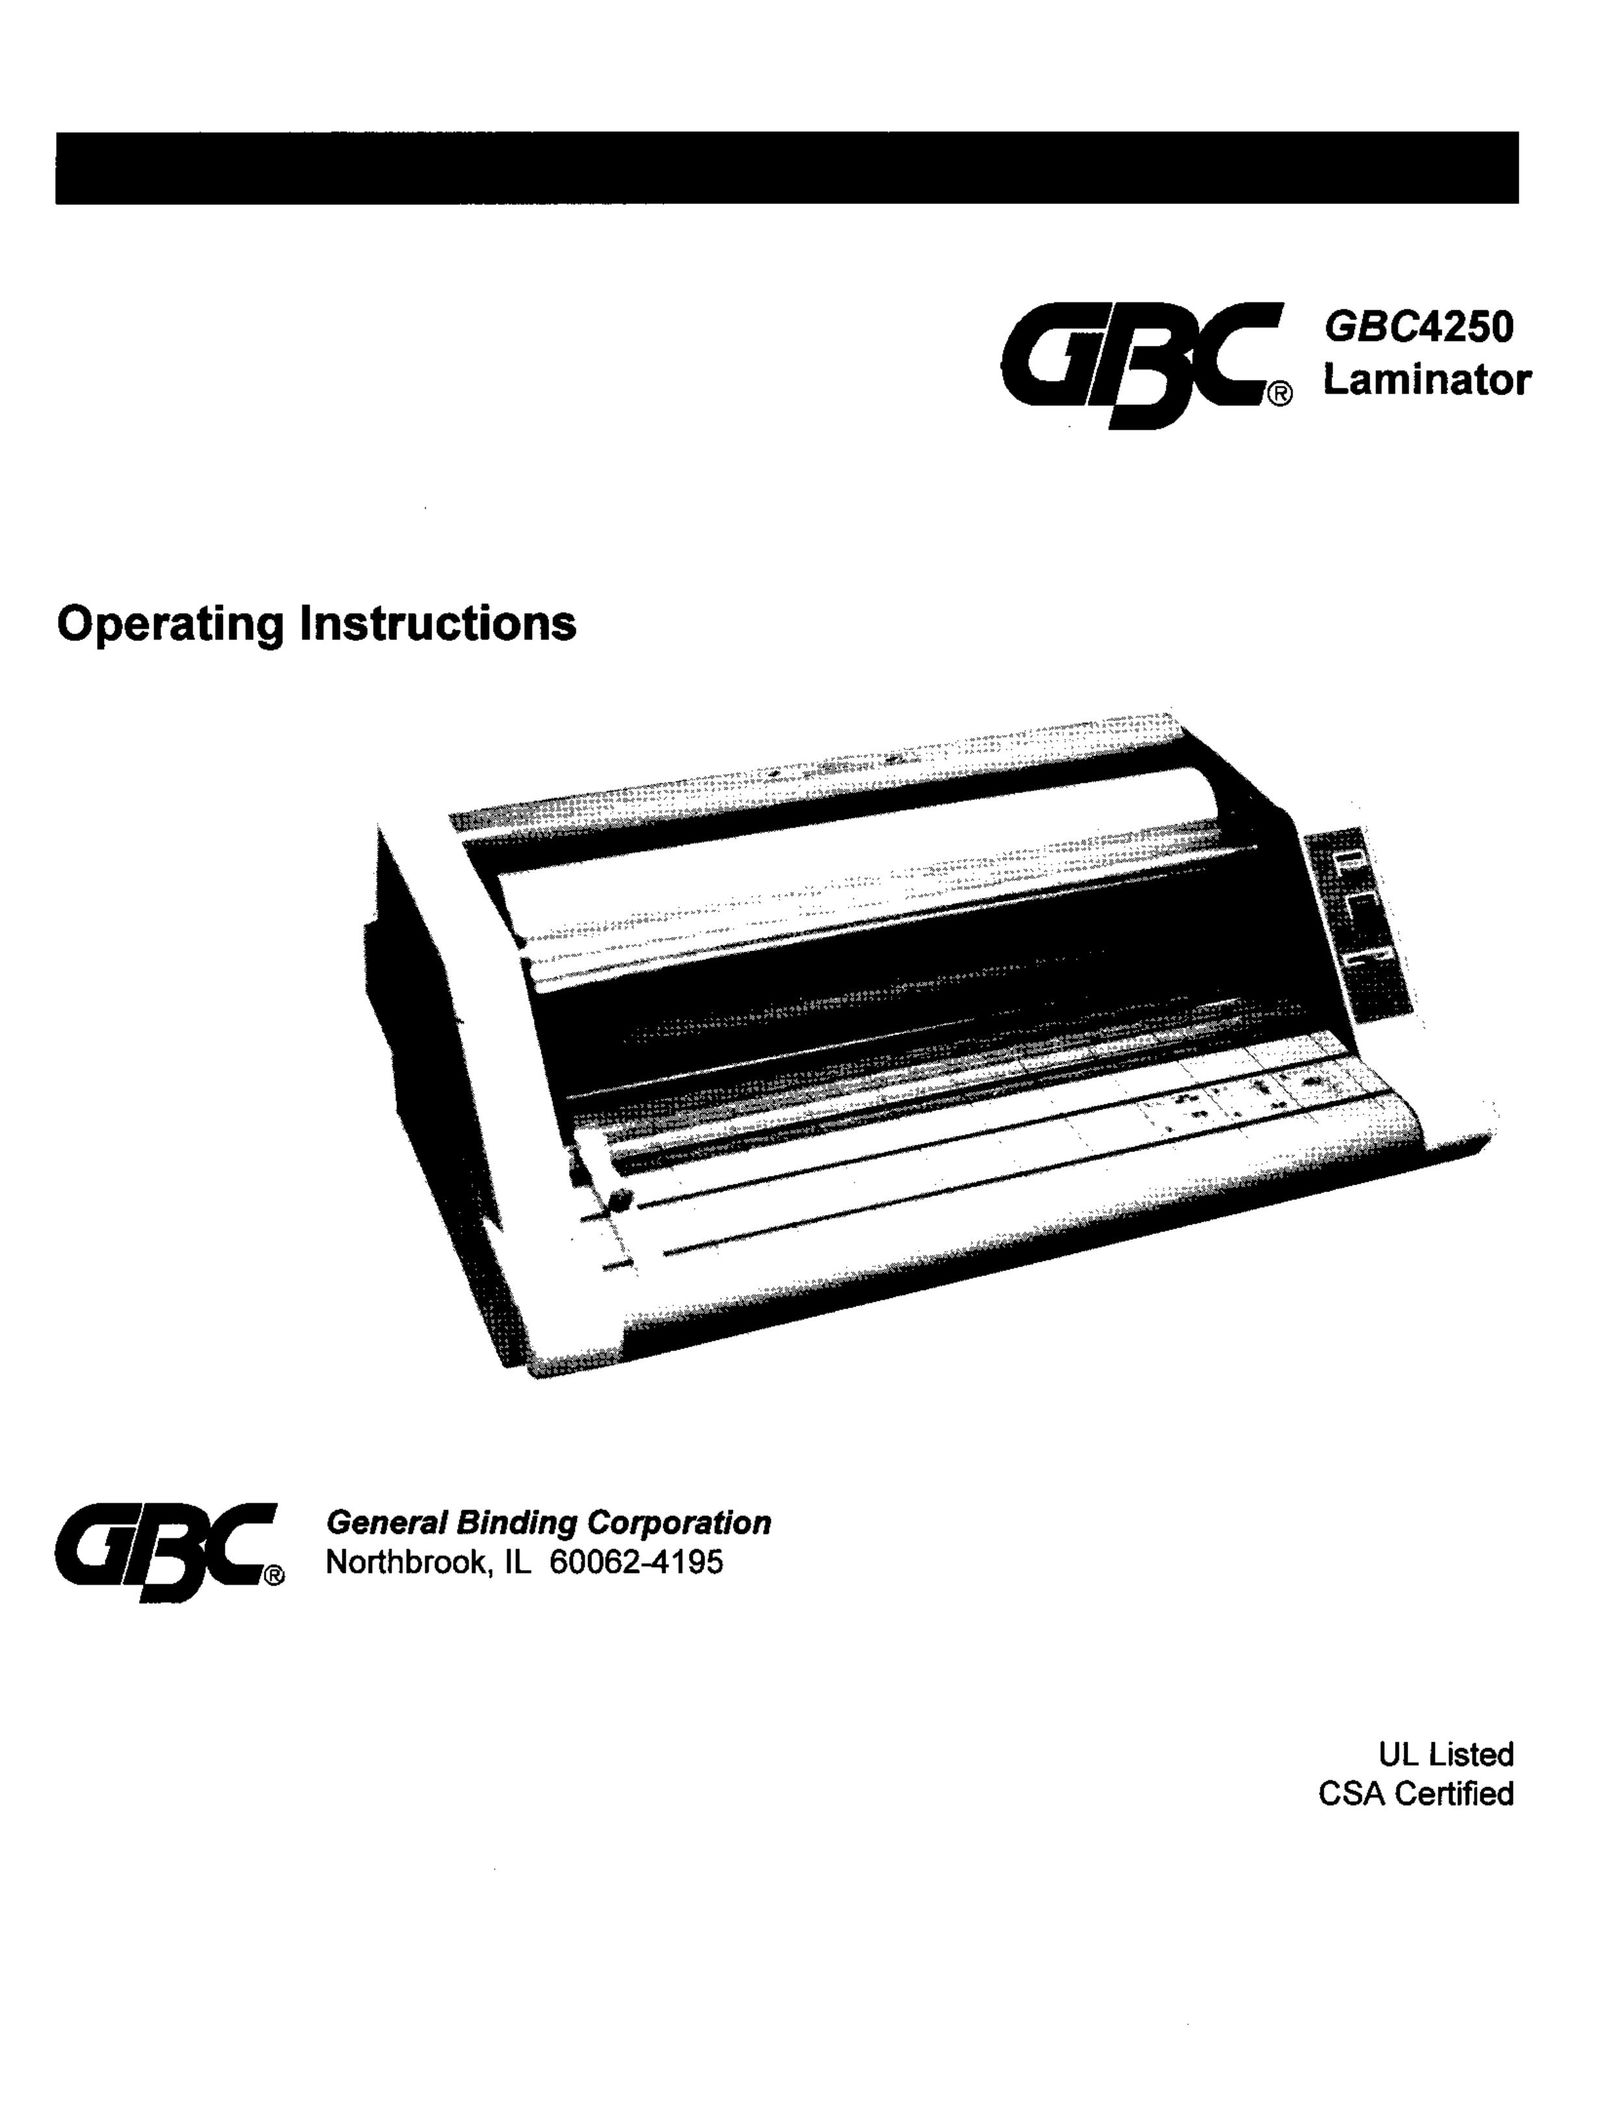 GBC 4250 Laminator User Manual